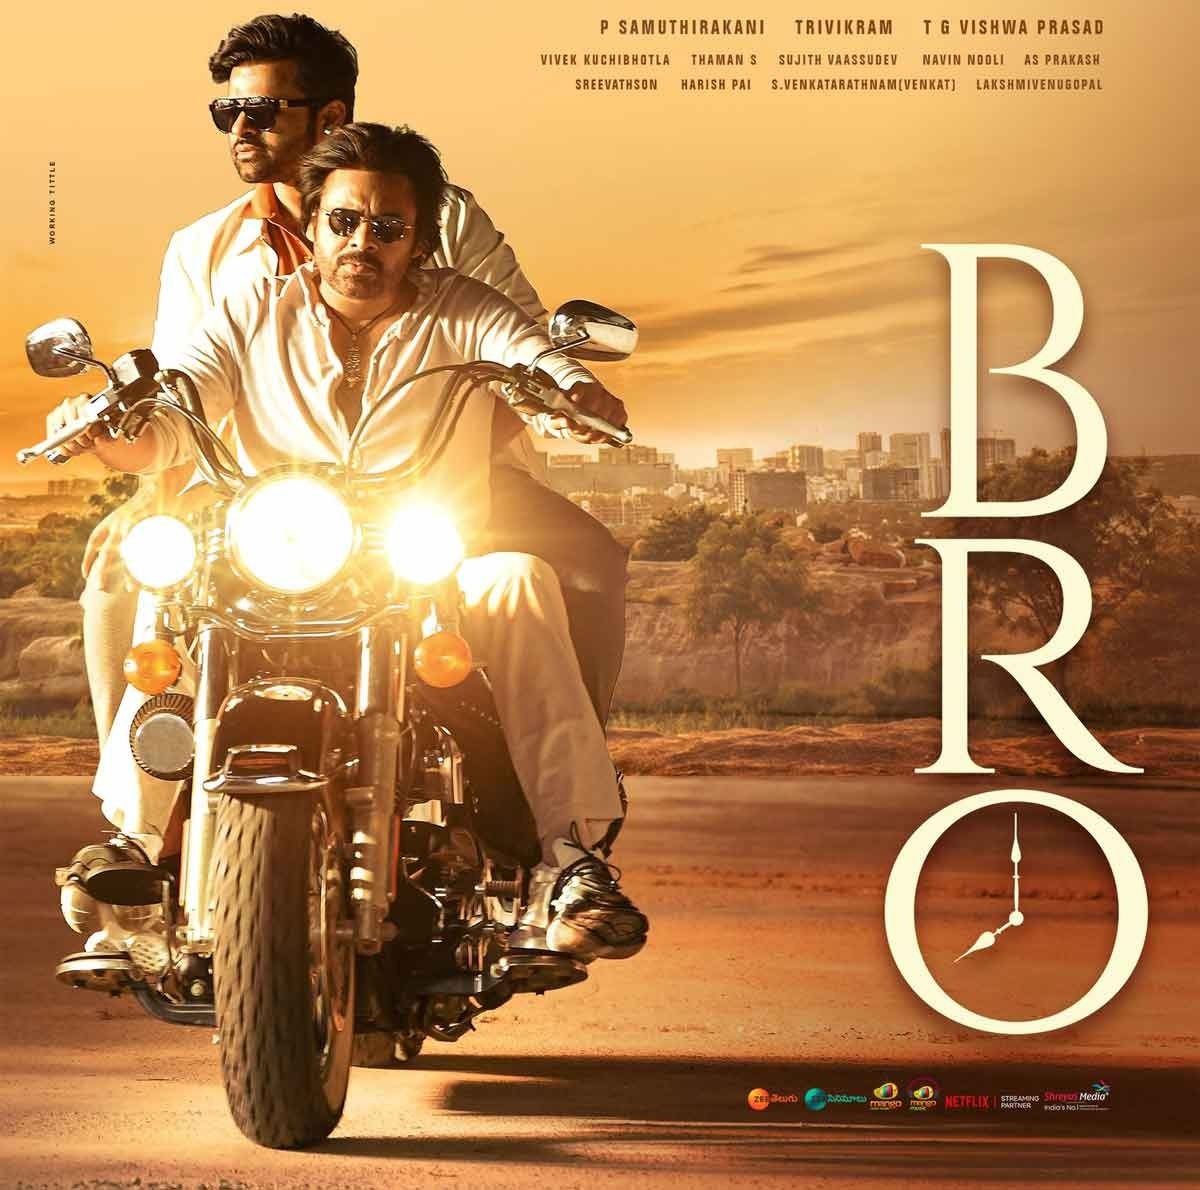 bro movie review rating in telugu